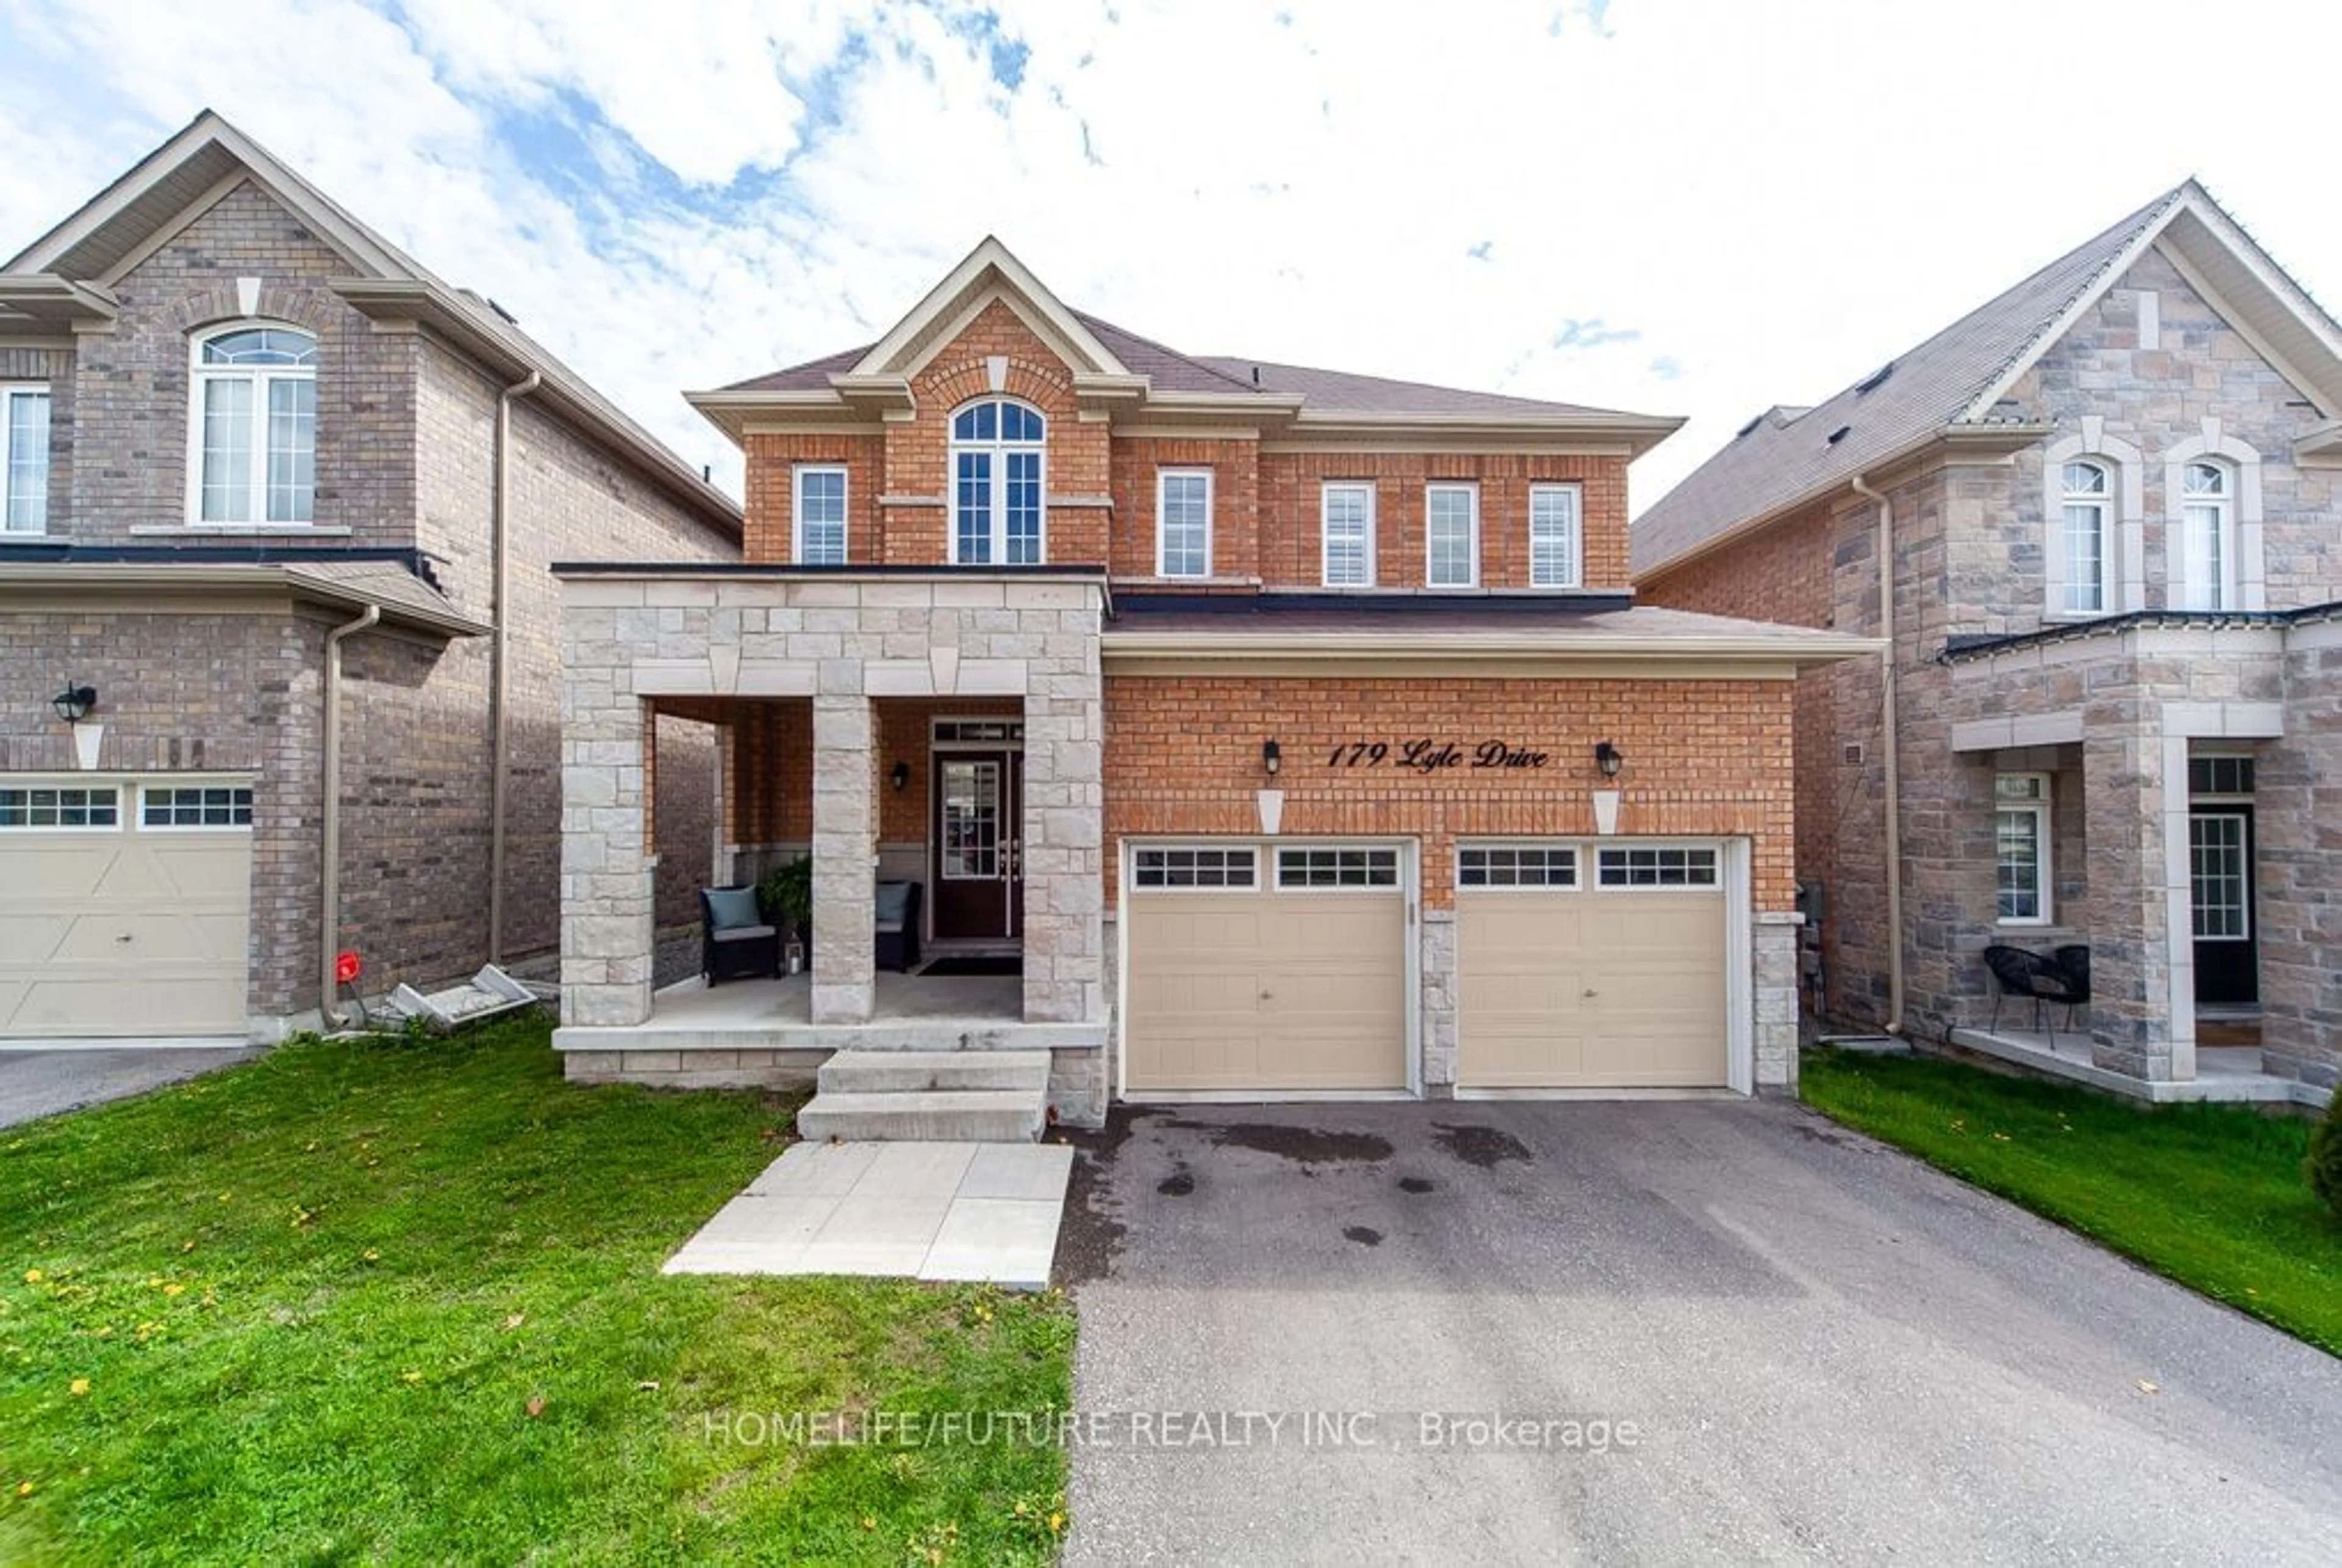 Home with brick exterior material for 179 Lyle Dr, Clarington Ontario L1C 0V8